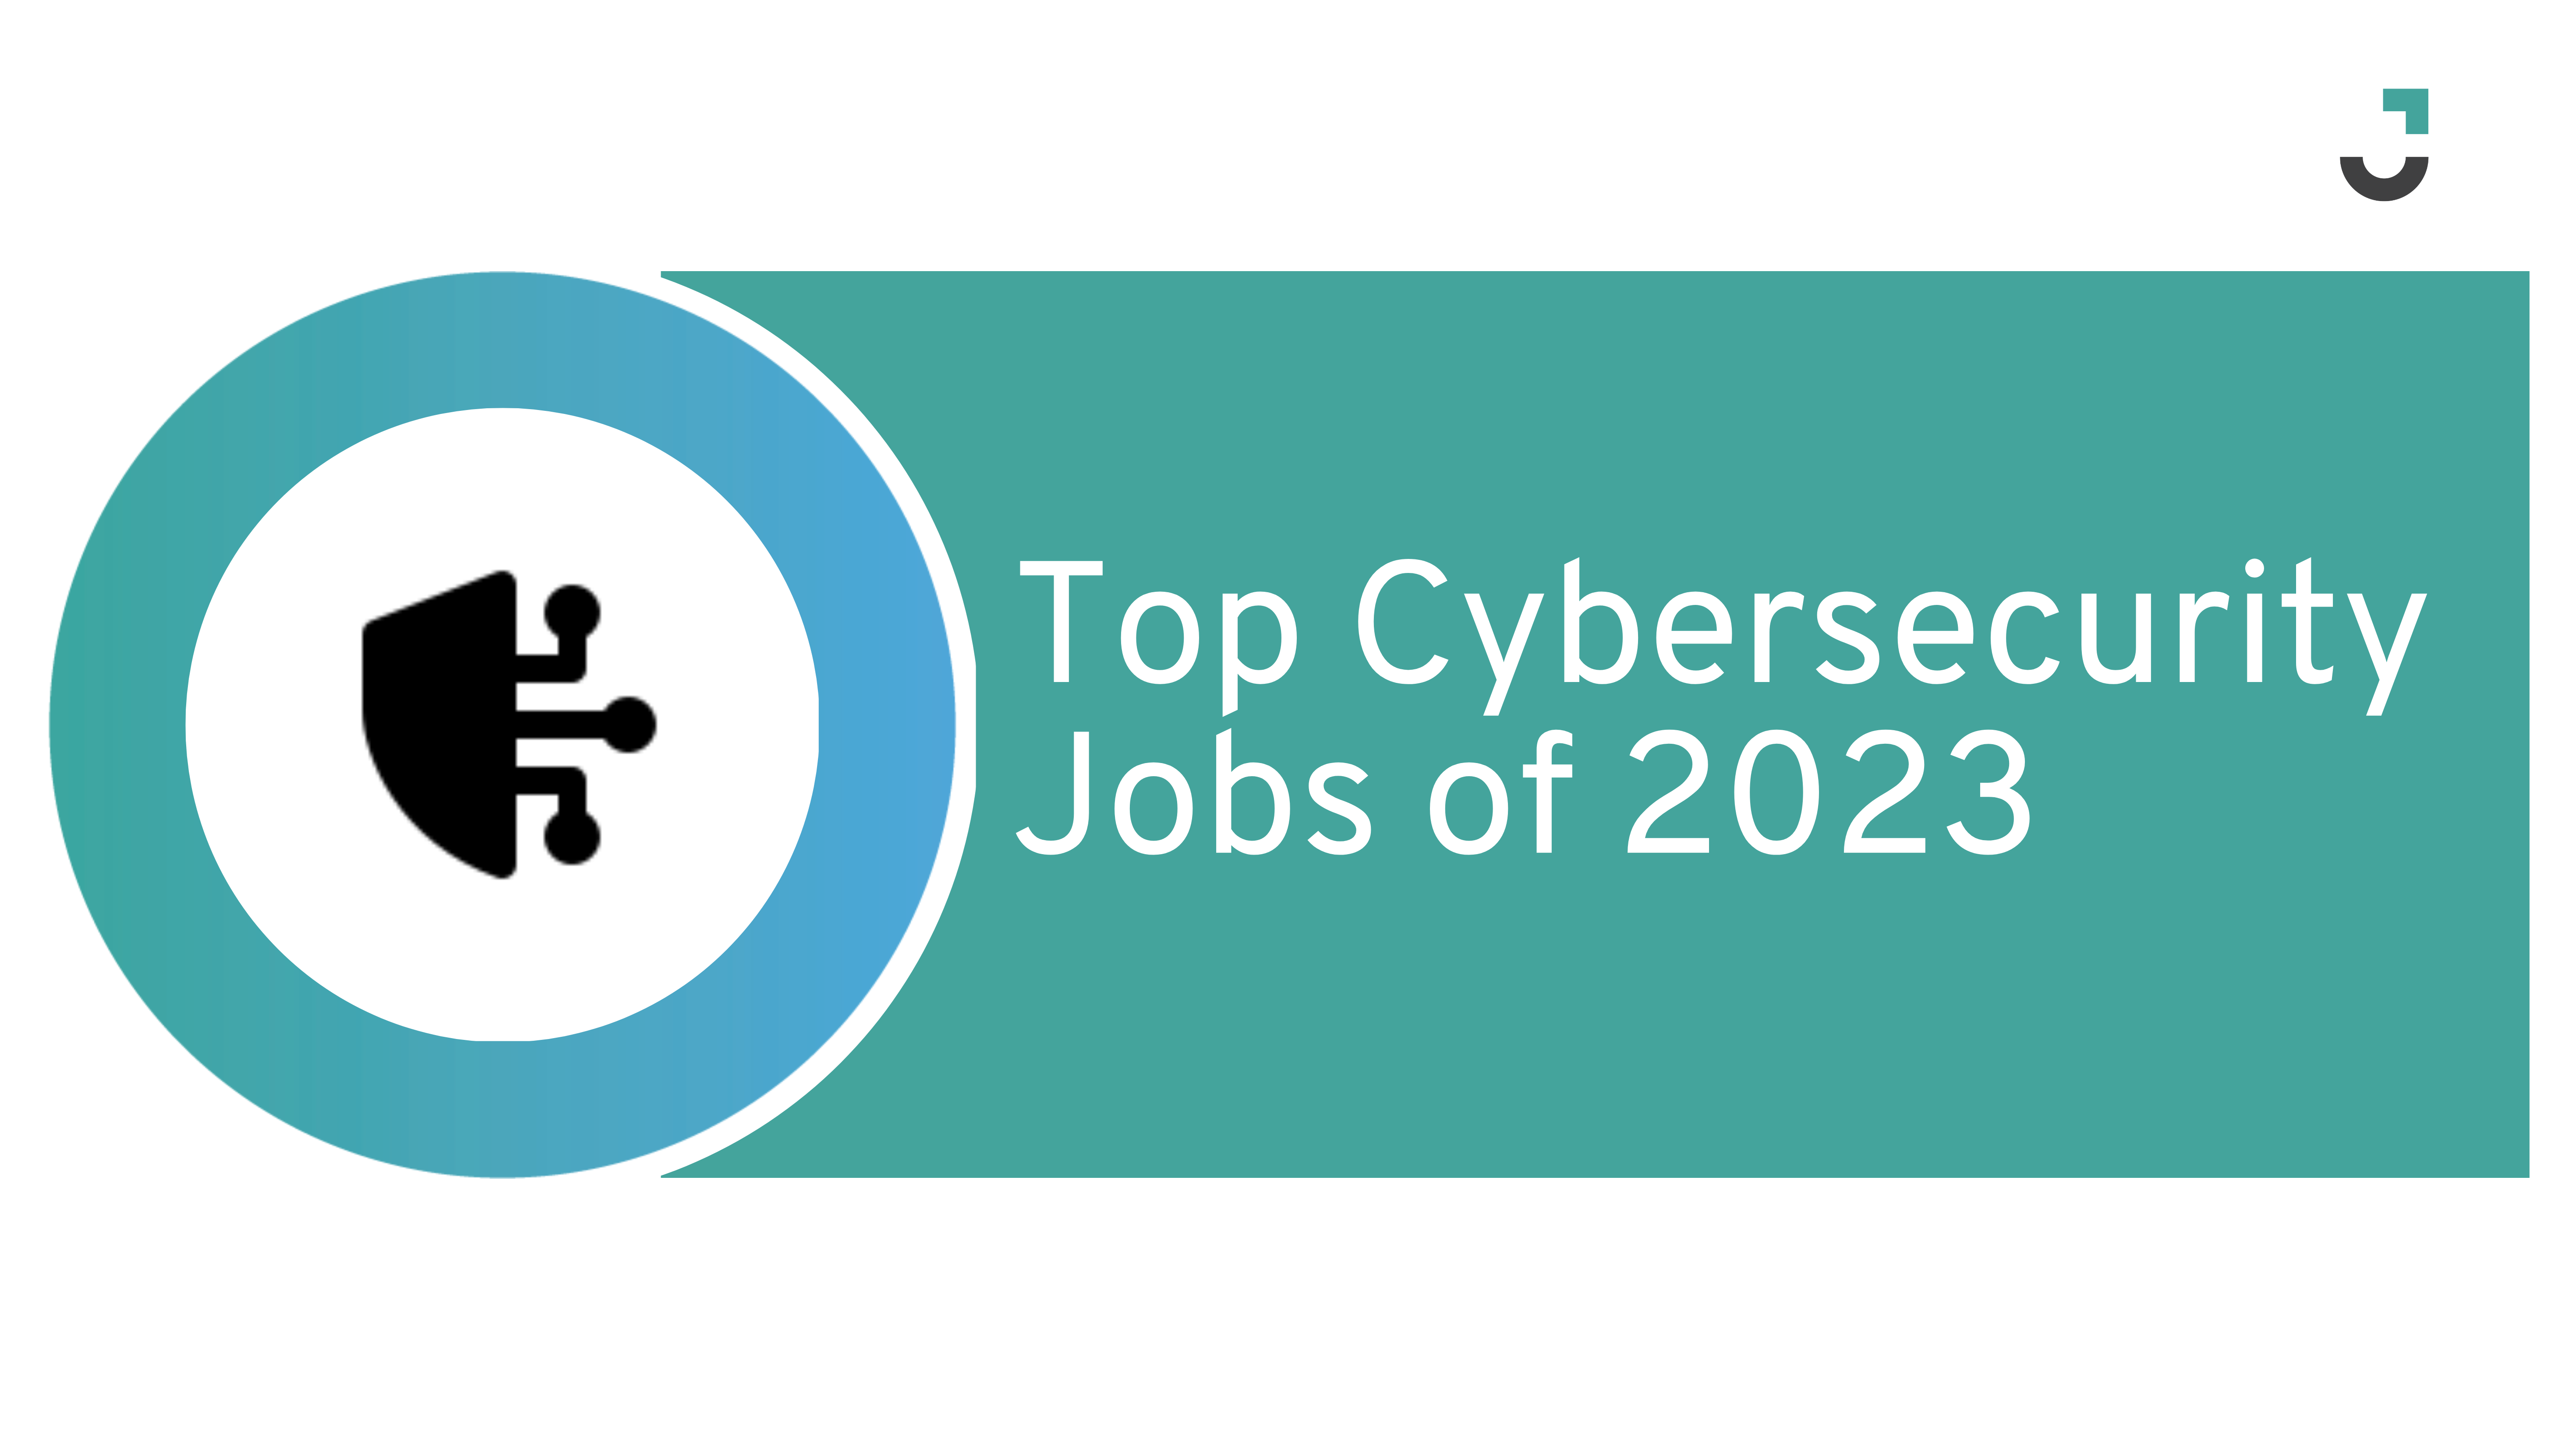 Top Cybersecurity Jobs of 2023